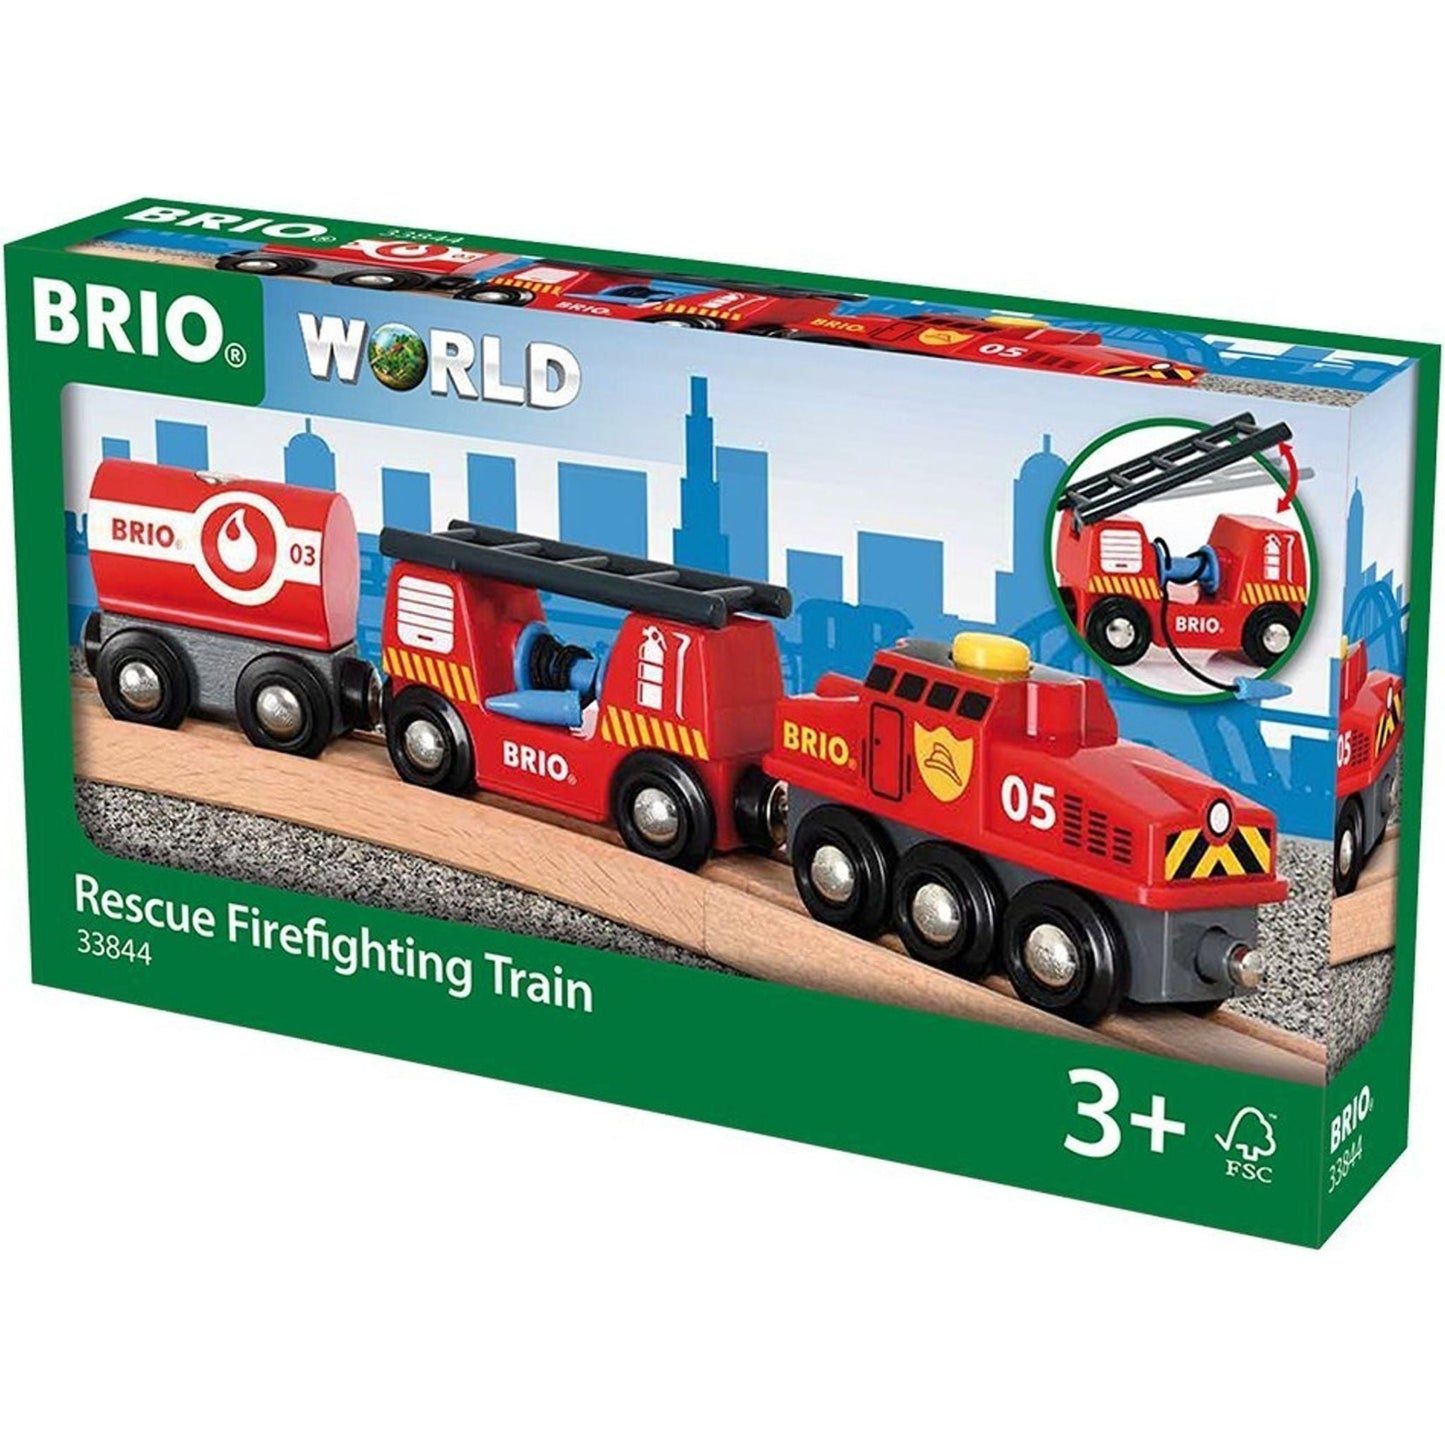 BRIO Train - Rescue Firefighting Train 4 pieces - Toybox Tales